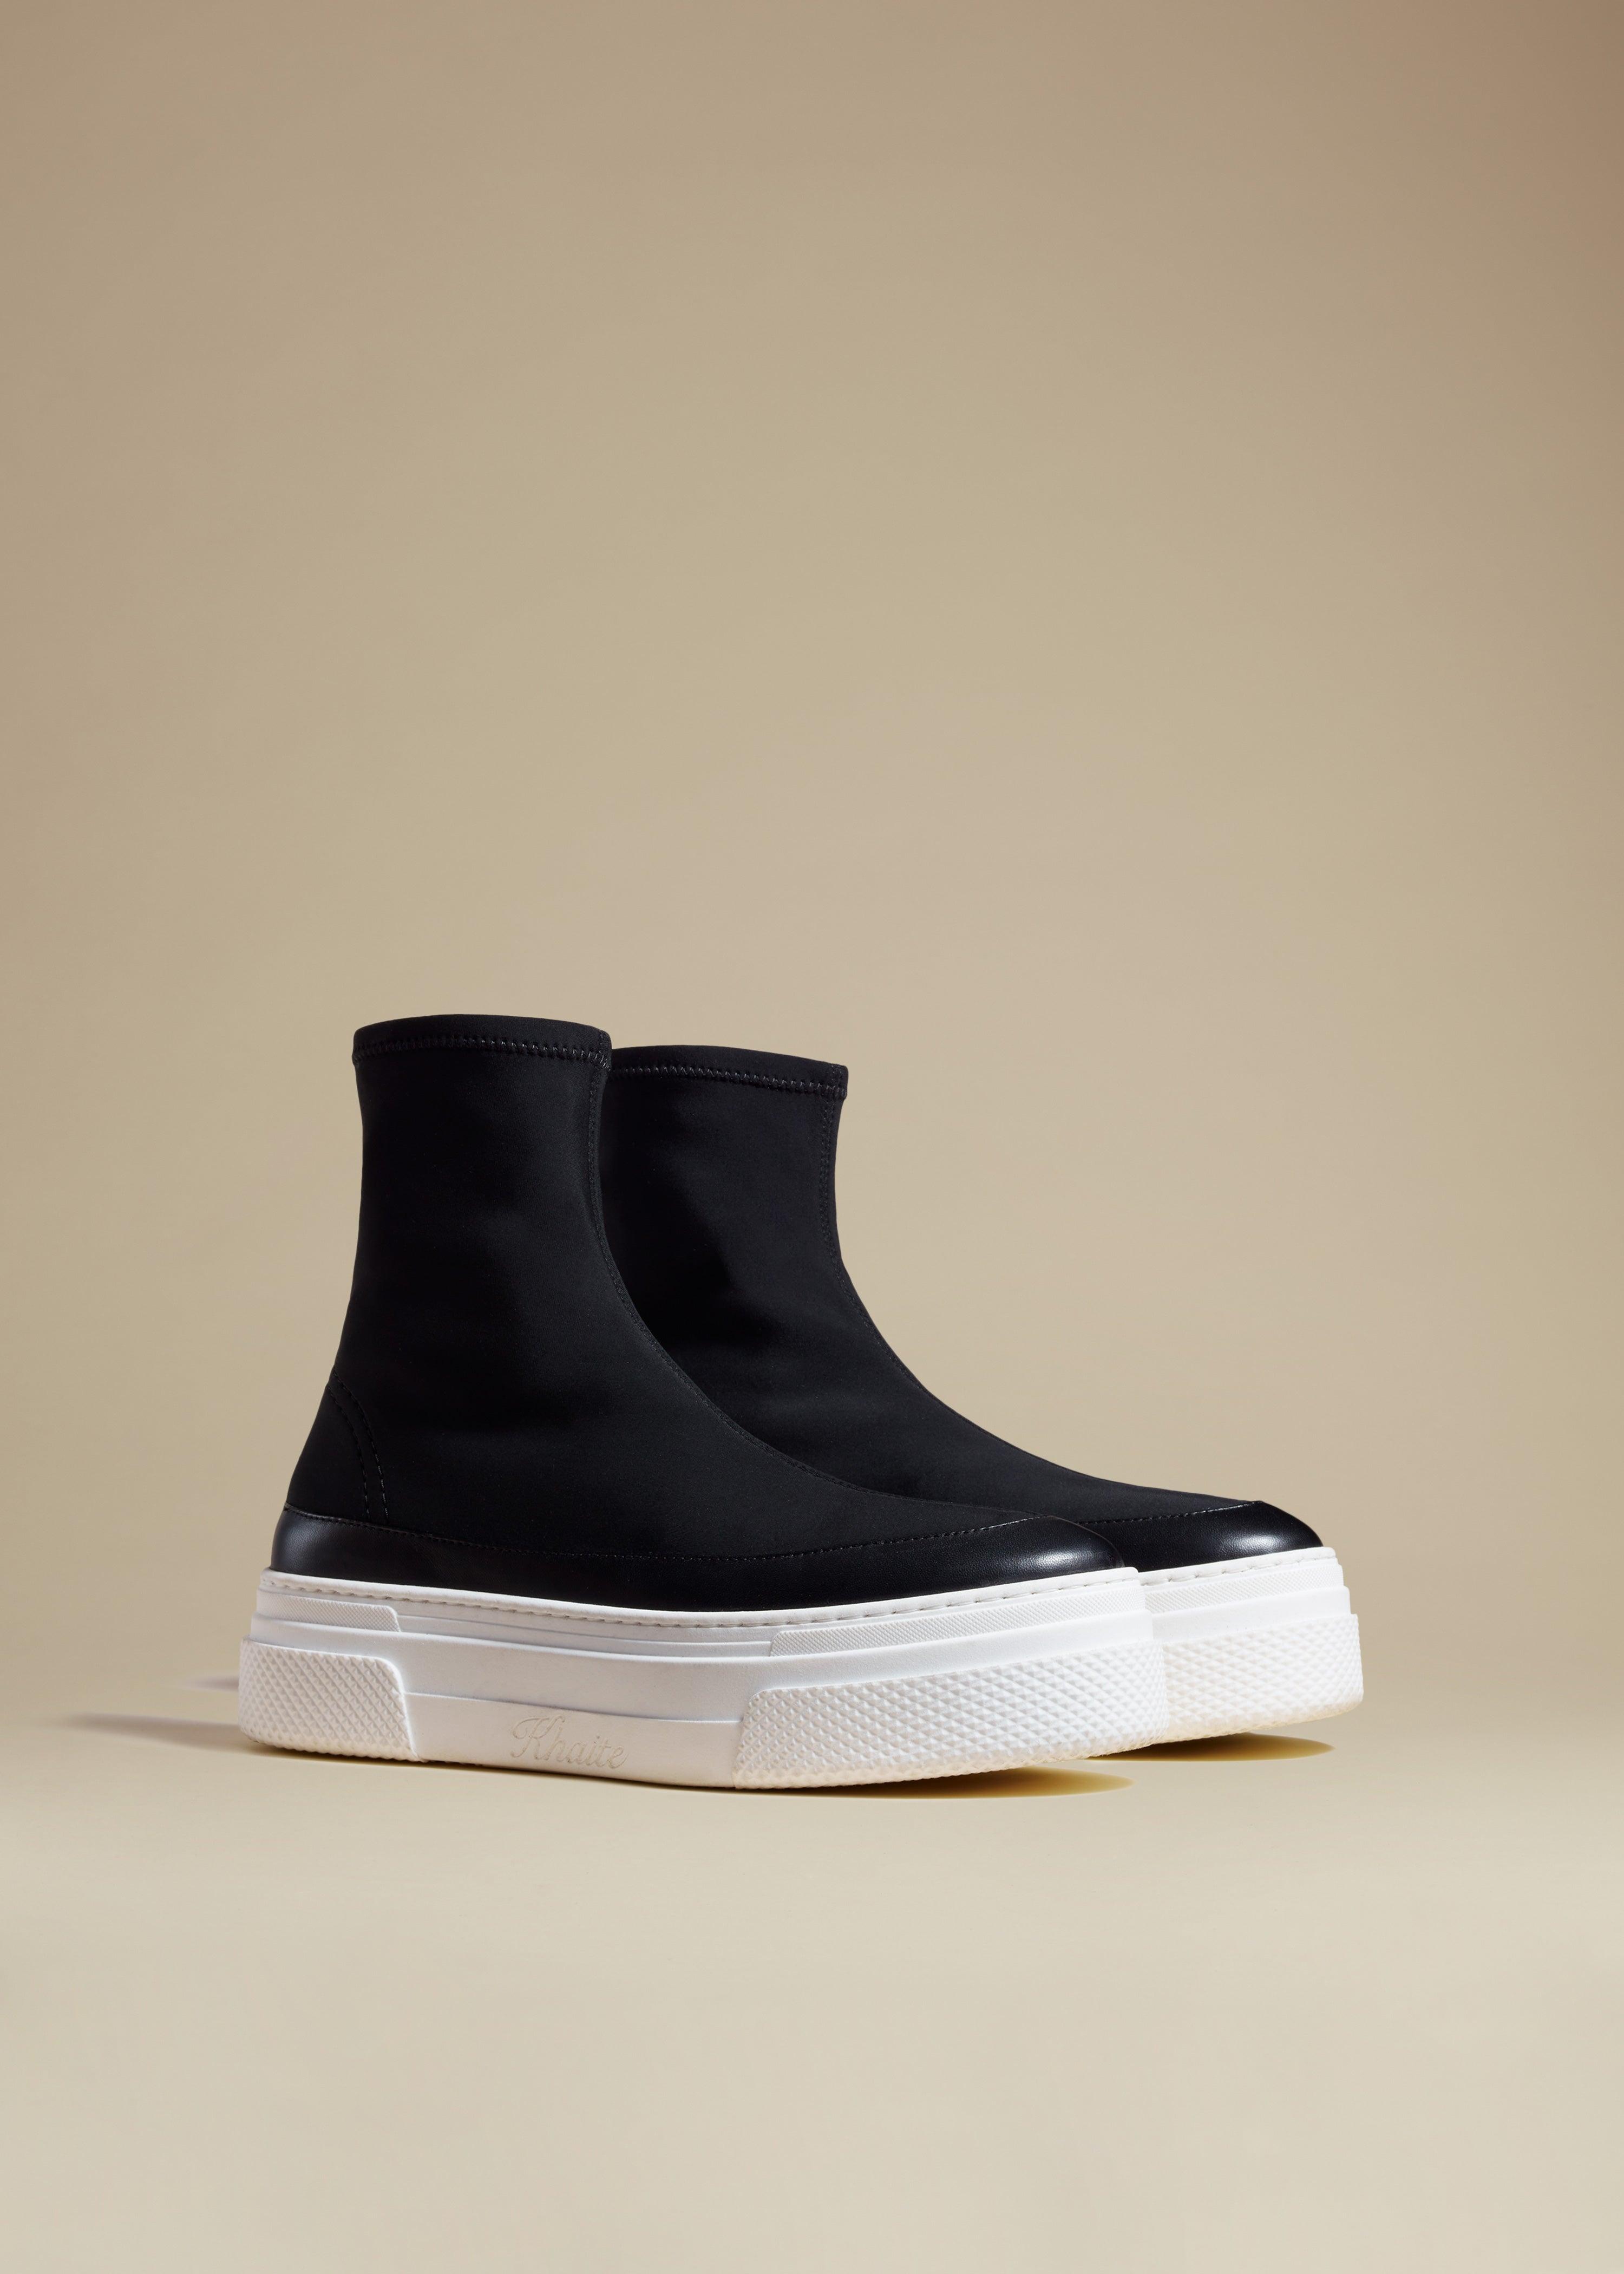 Khaite The Ludlow Sneaker in Black | Lyst